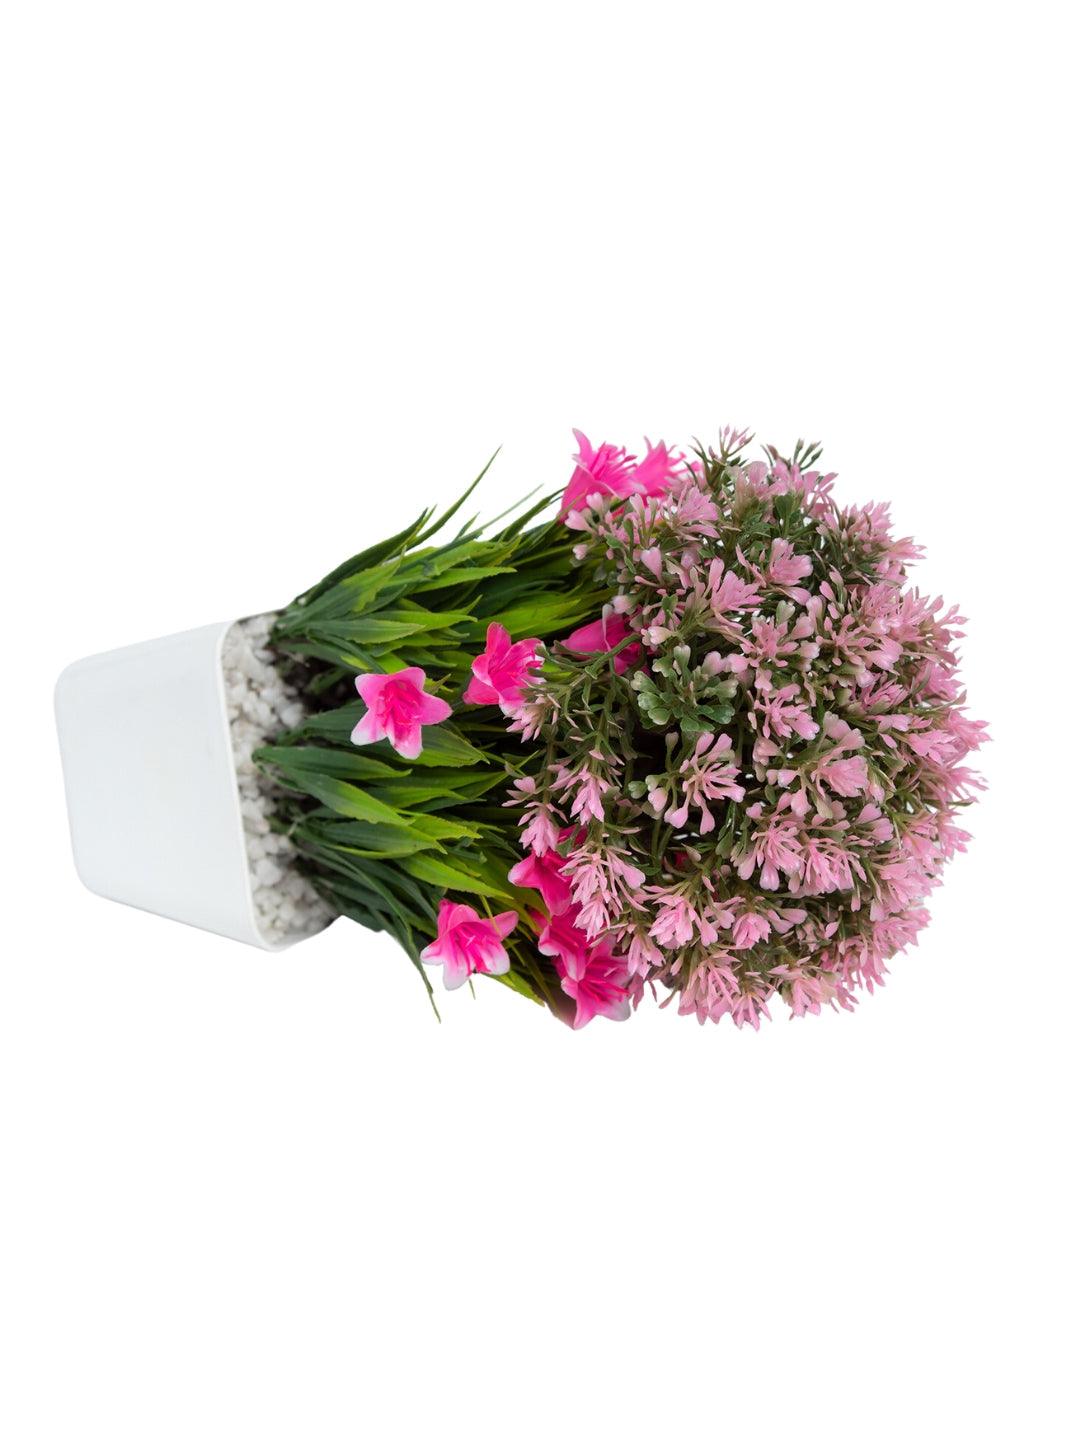 Pink Artificial Flower Pot For Home Decor